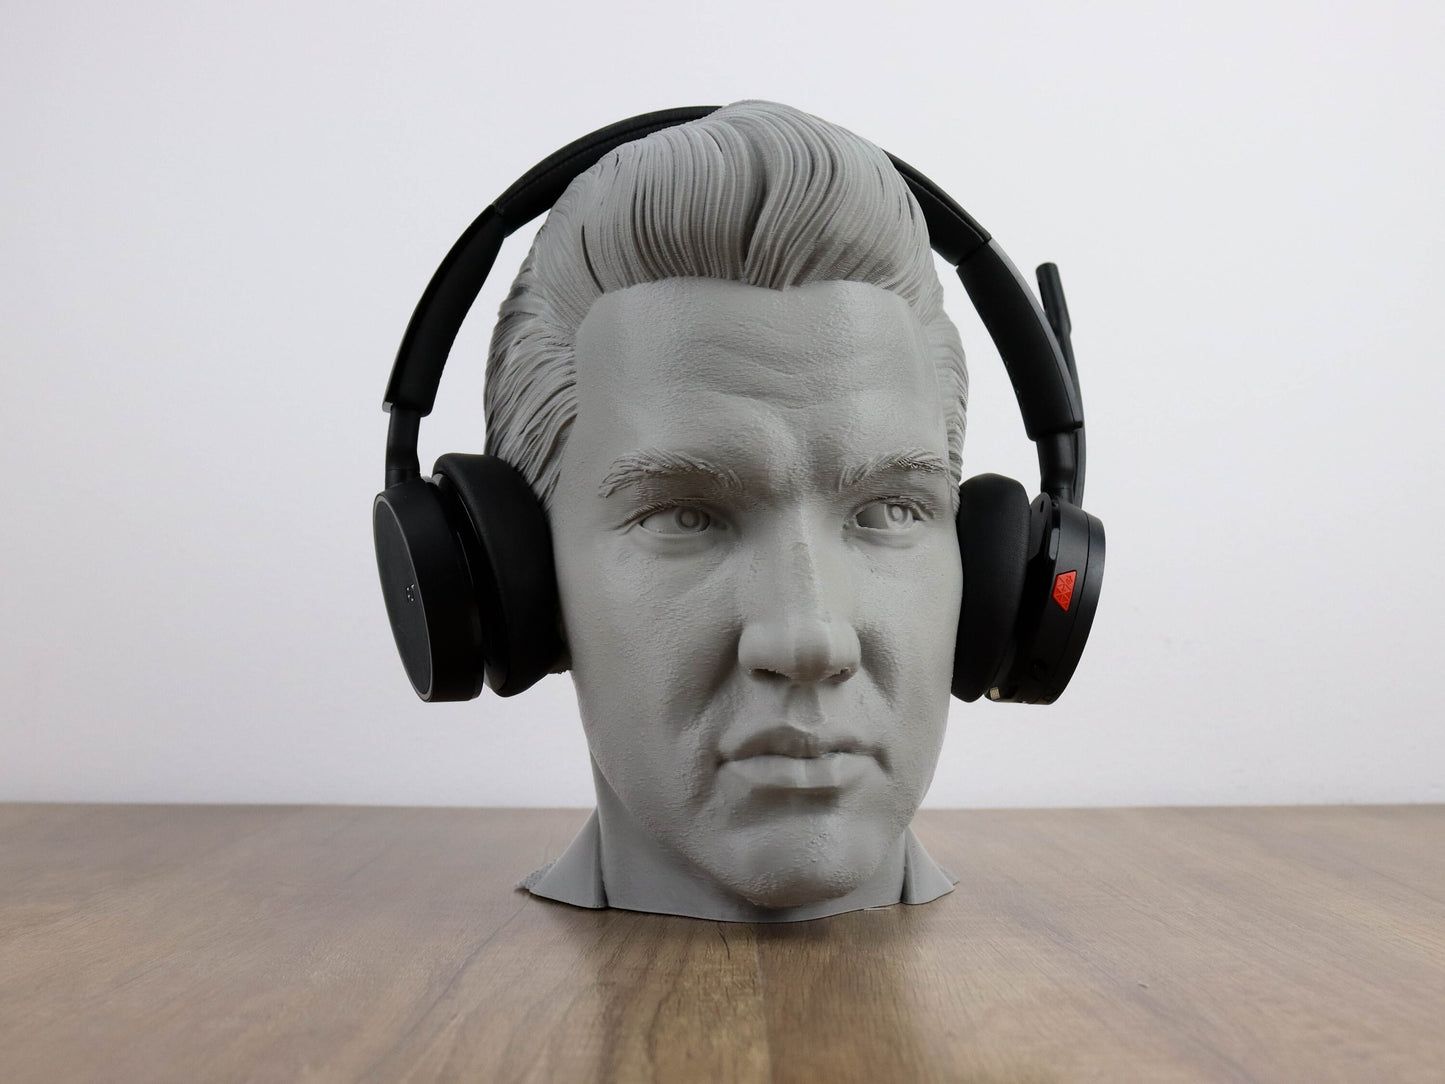 Elvis Presley Headphone Holder, Desktop Decor Headphone stand, Gaming Accessories